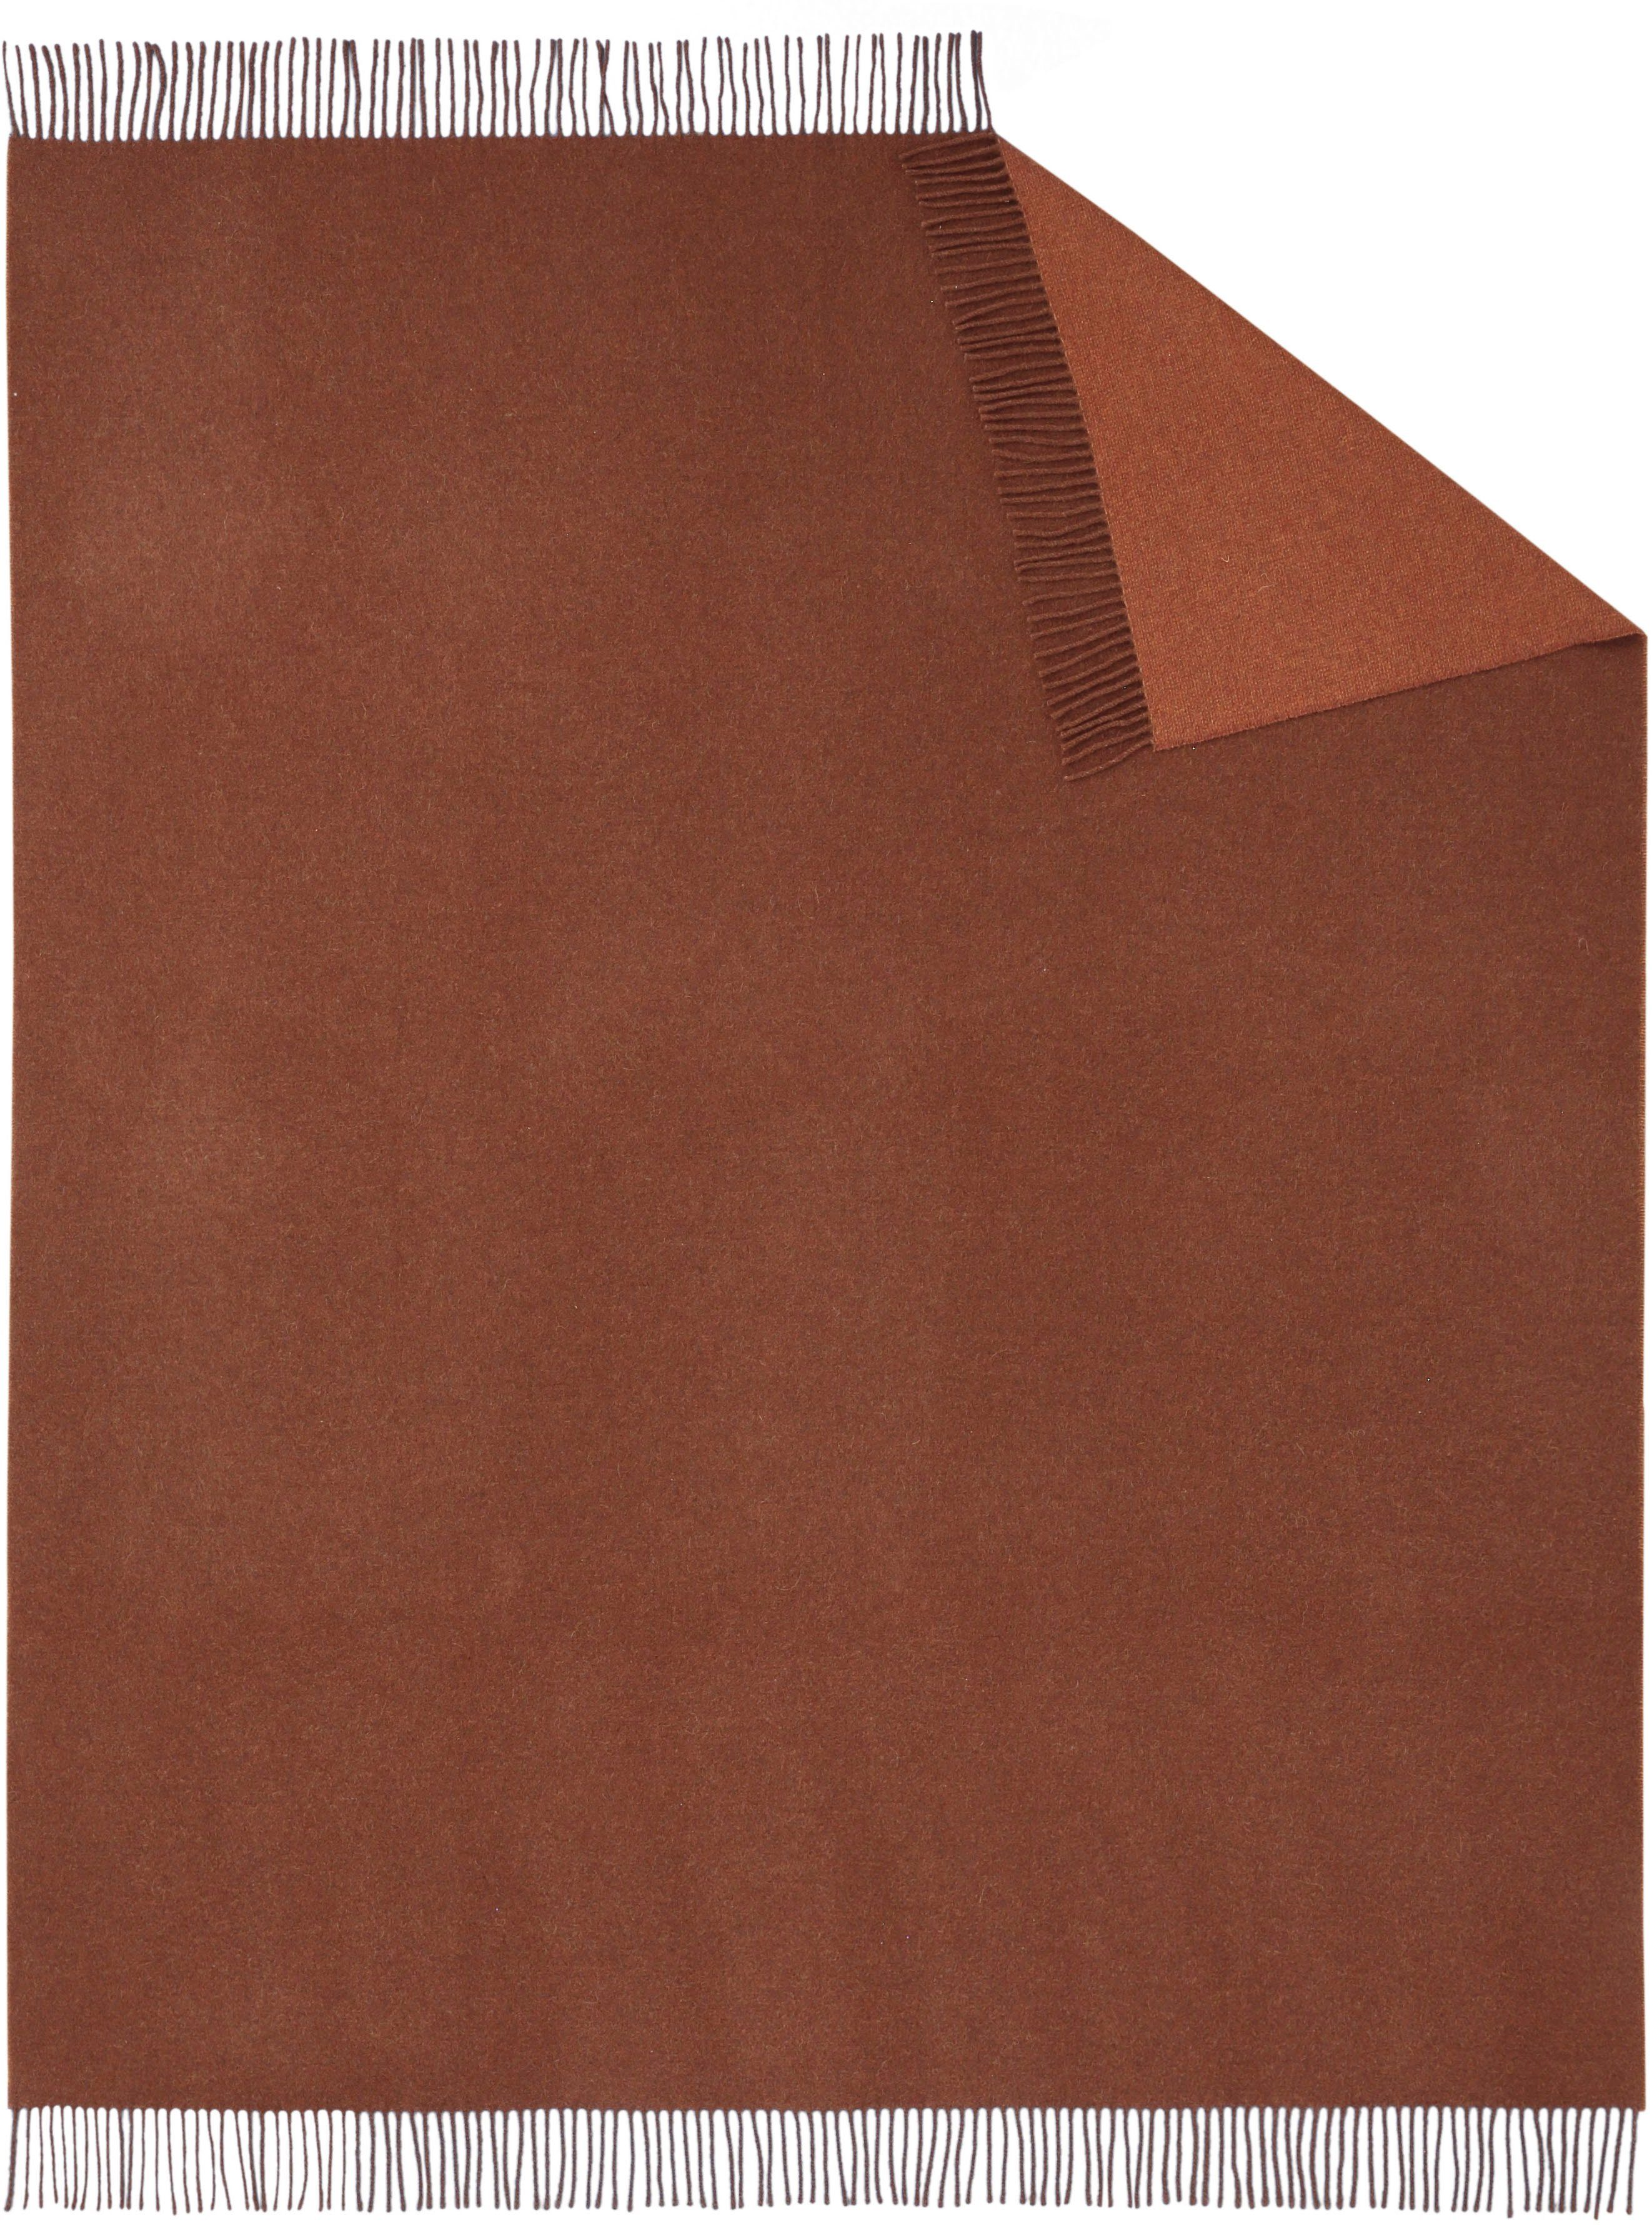 Biederlack, Impression, im rost-terracotta Plaid Soft Doubleface-Look